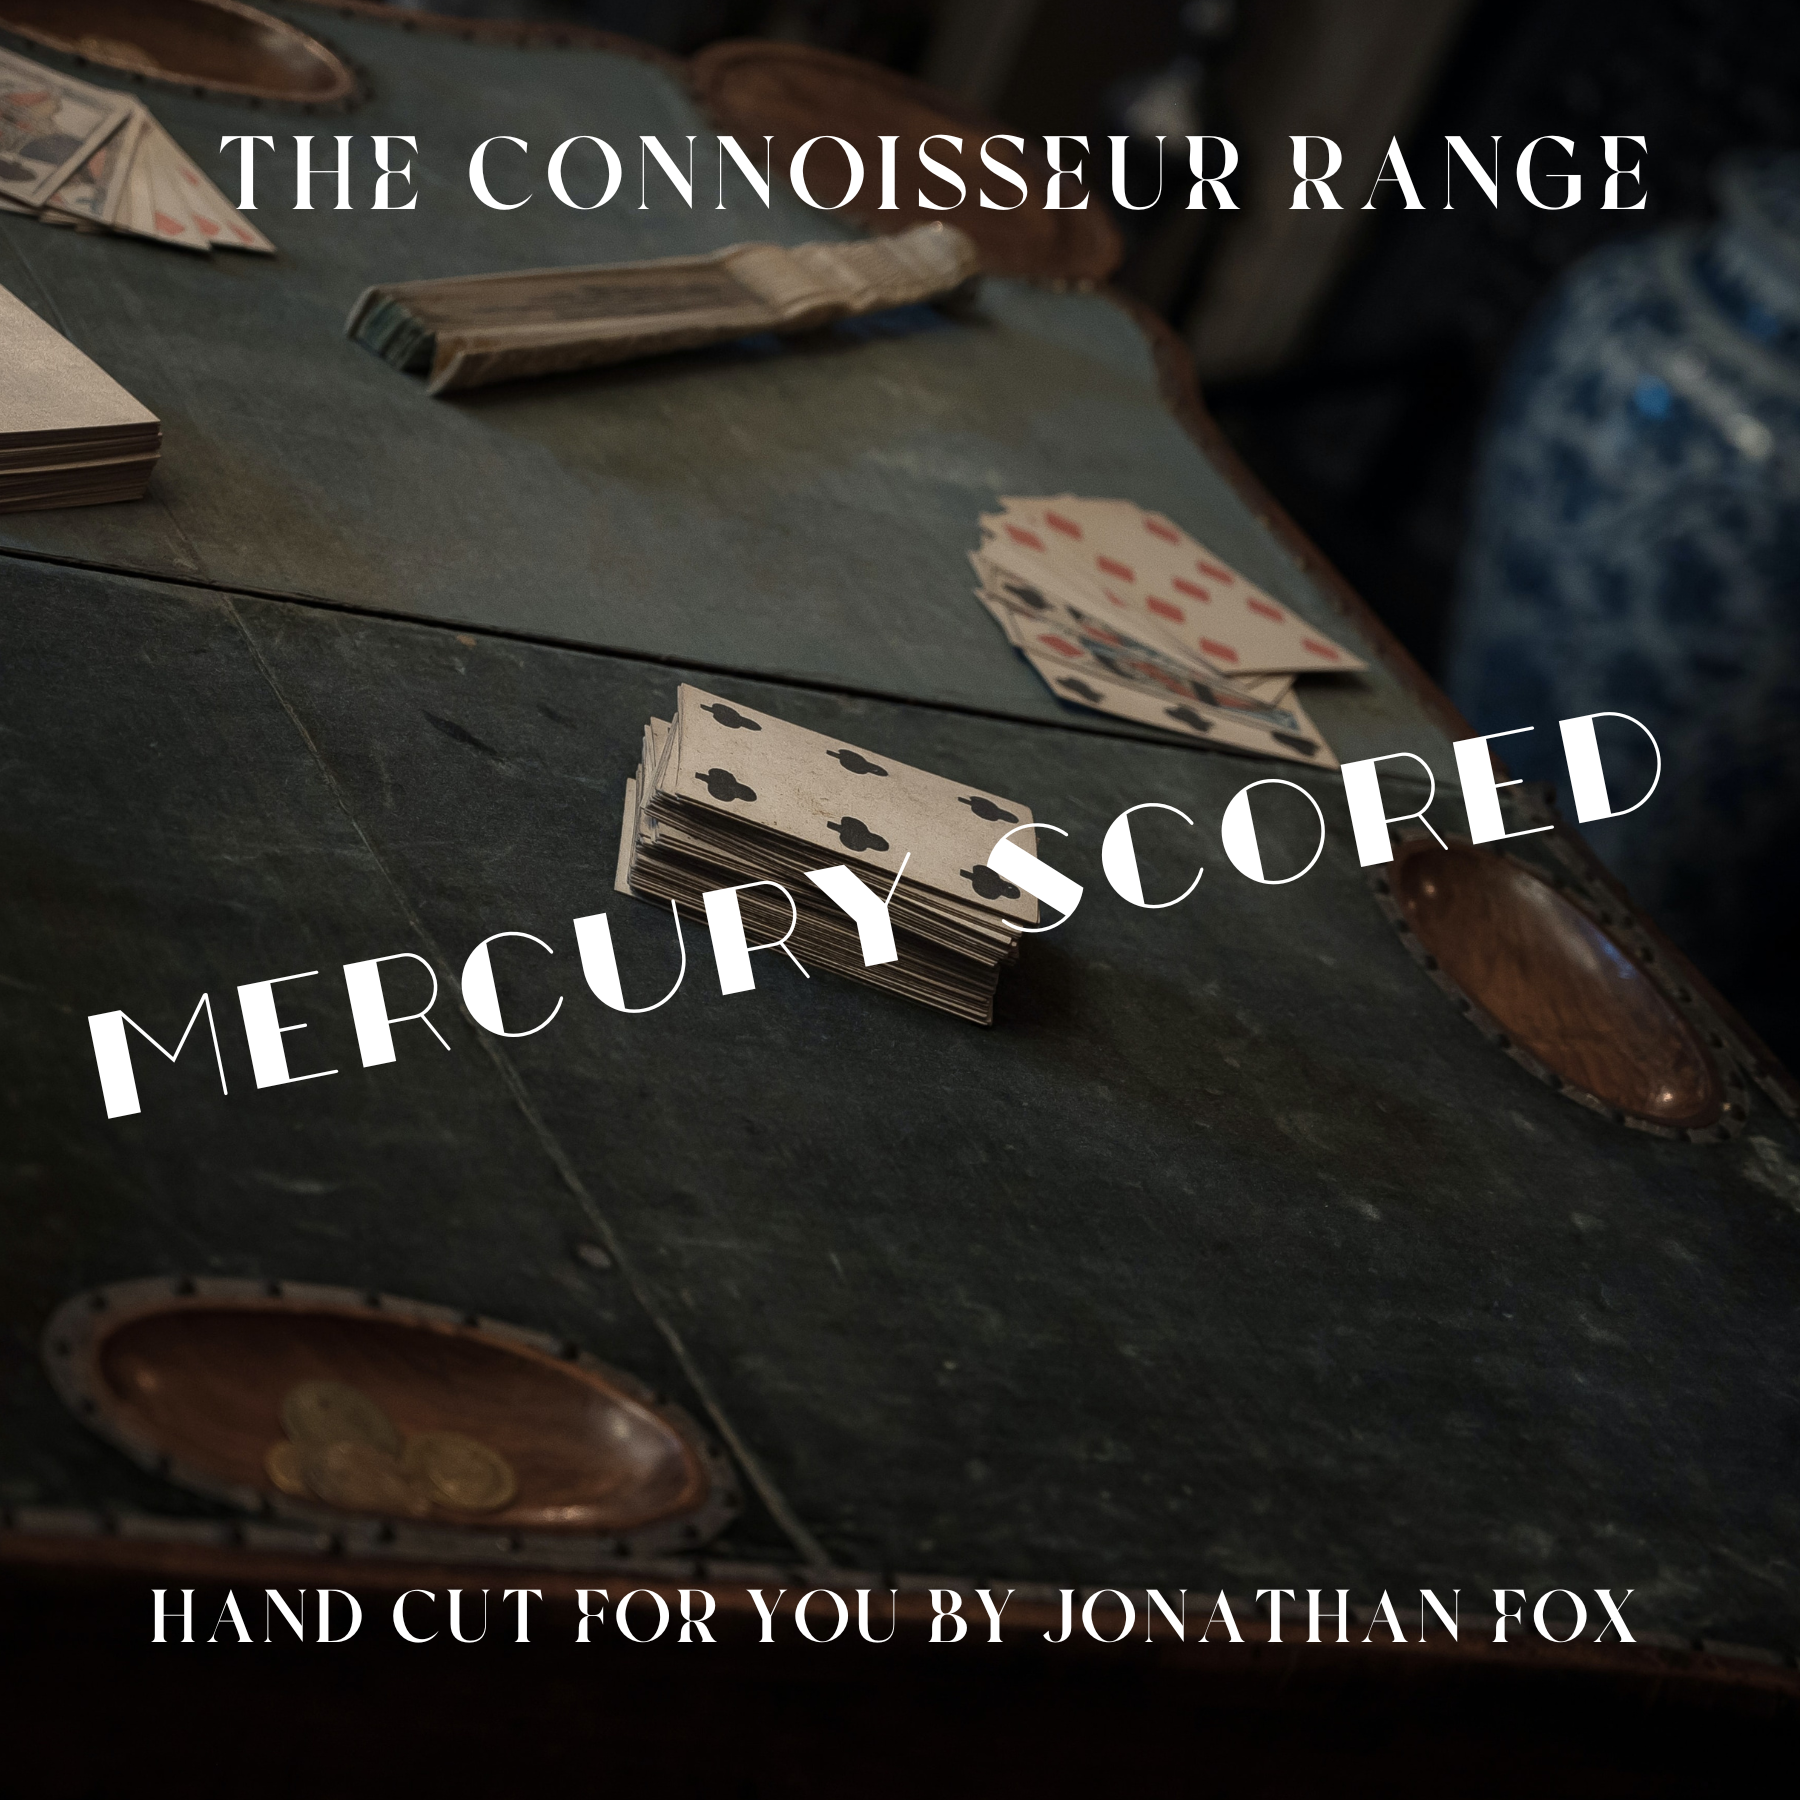 Mercury Scored Deck by Jonathan Fox